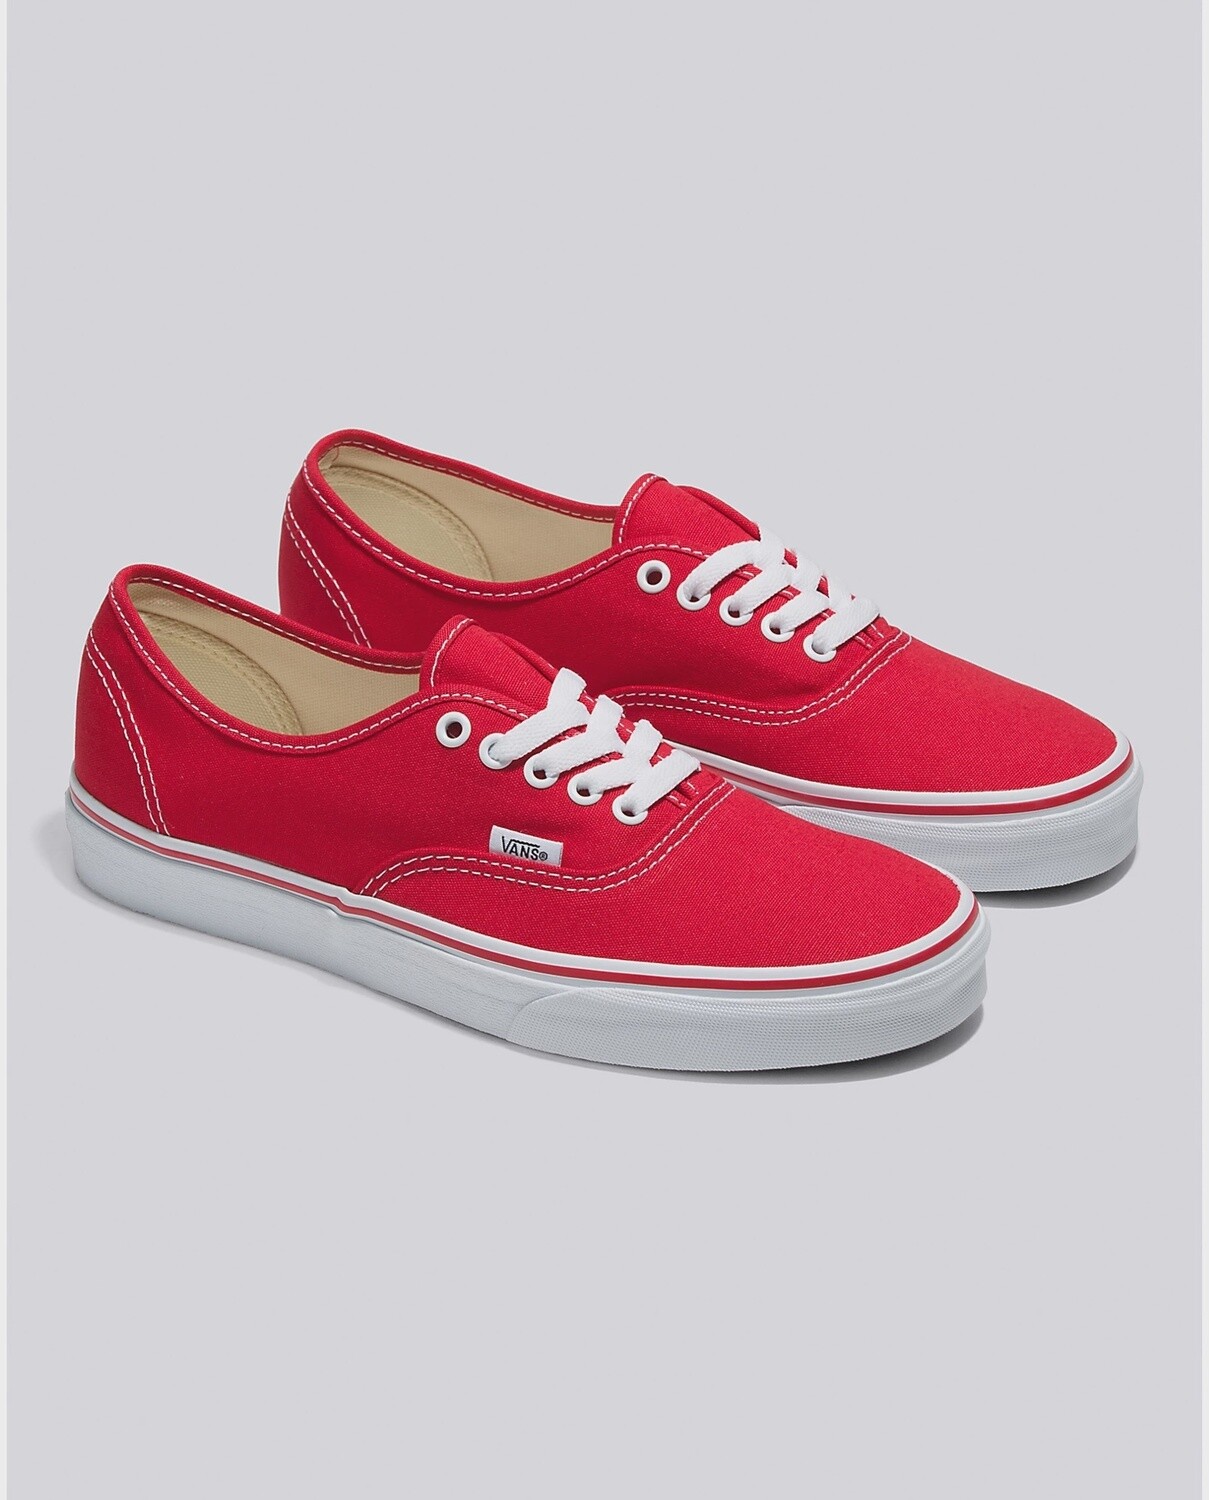 Vans Authentic Red Shoes